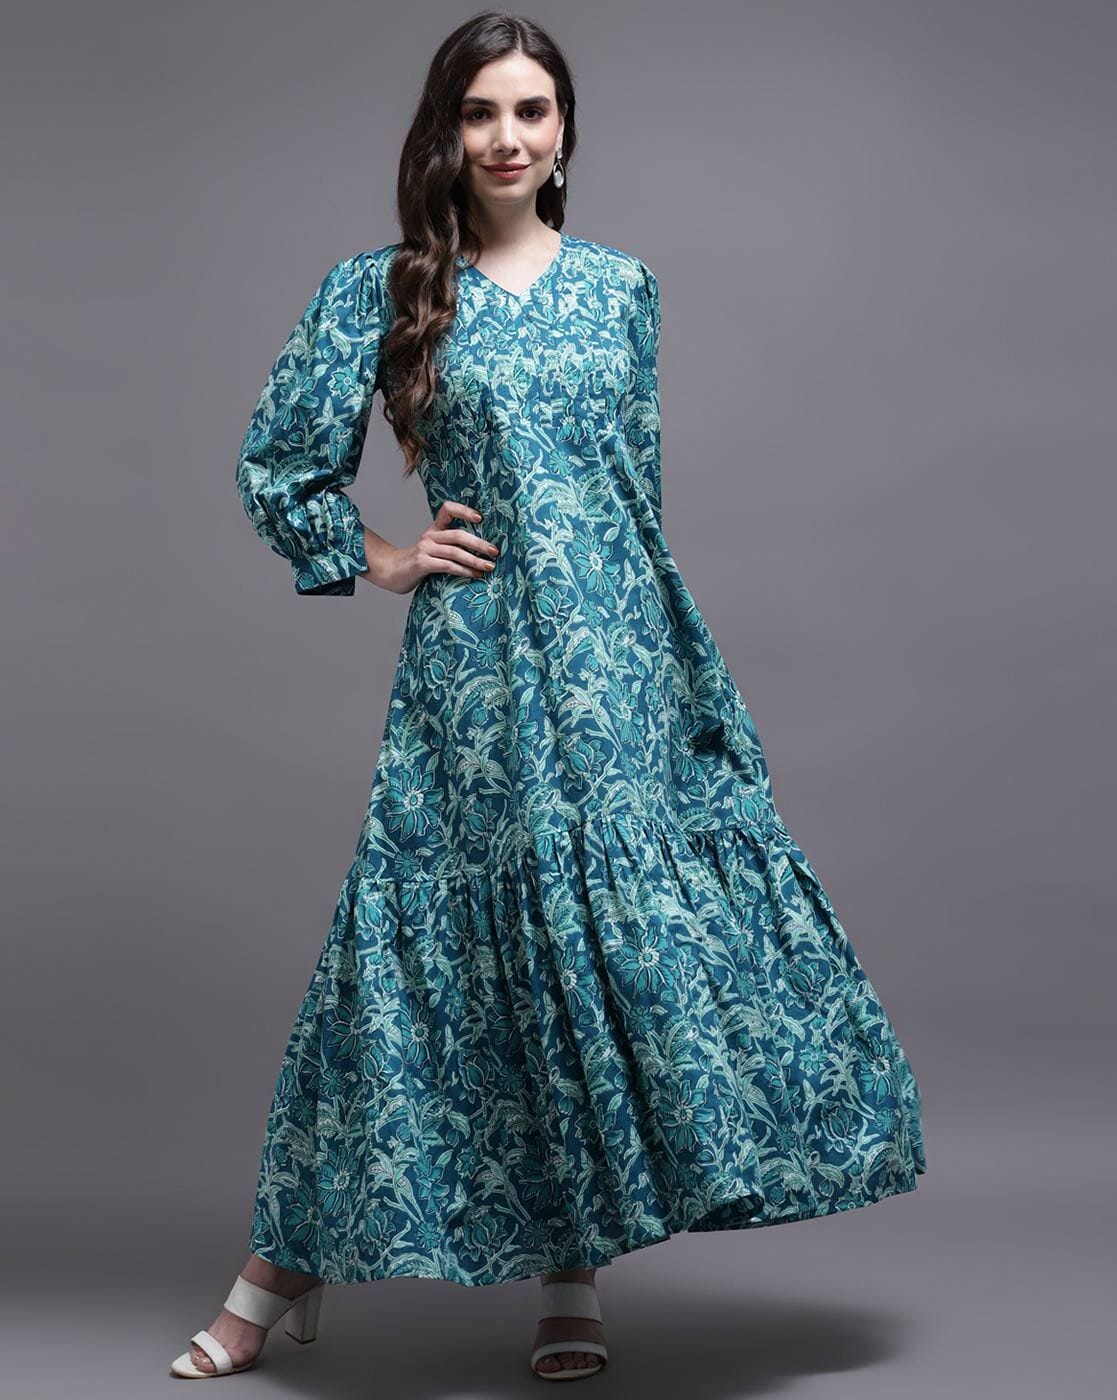 Teal blue Taffeta and art silk Gown Dress - GWU0055